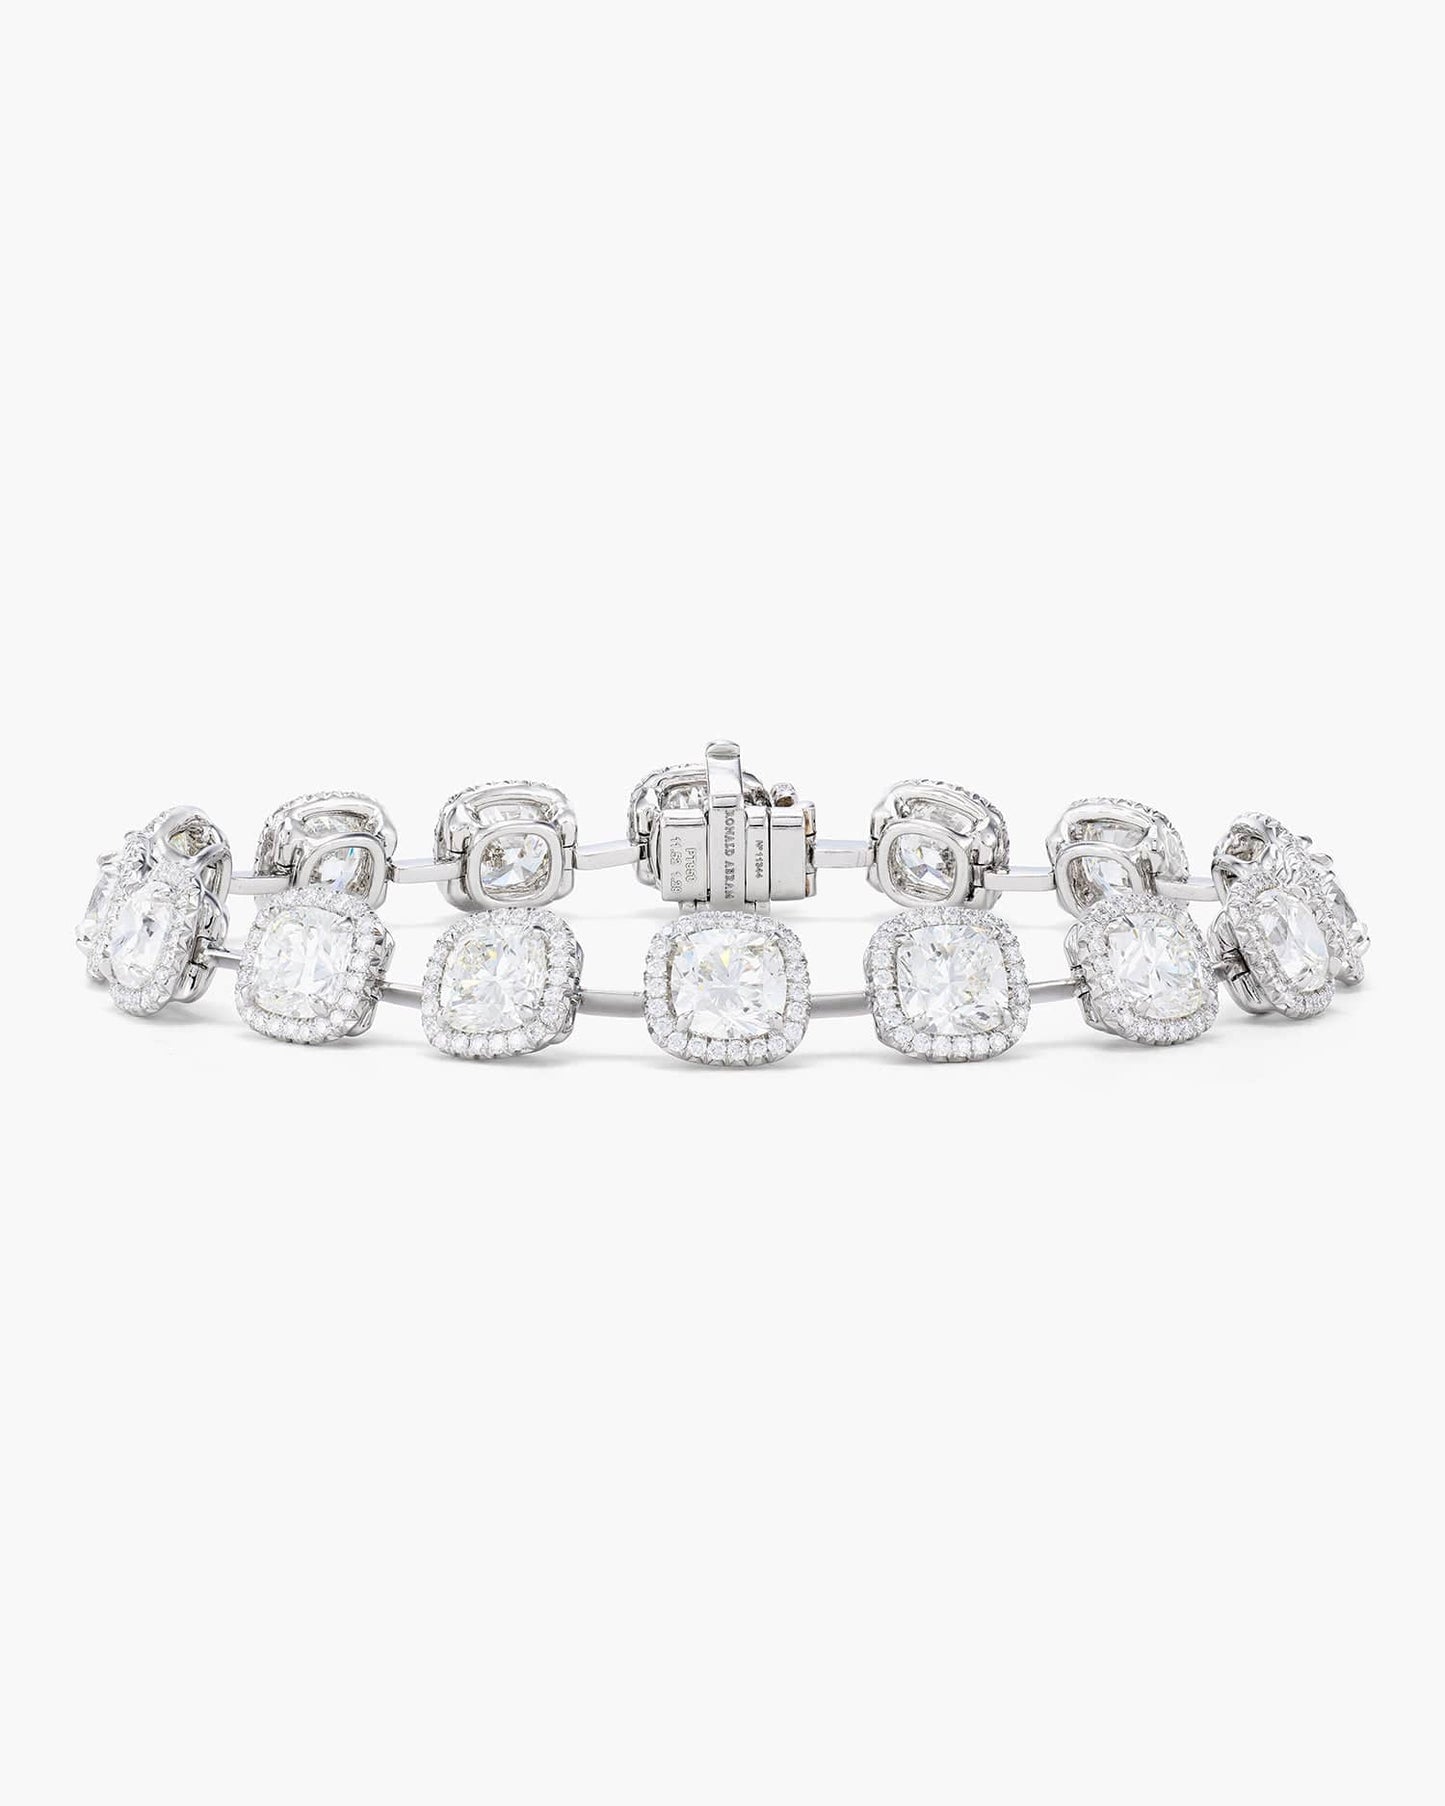 Cushion Cut and Round Brilliant Cut Diamond Bracelet (0.70 carat)